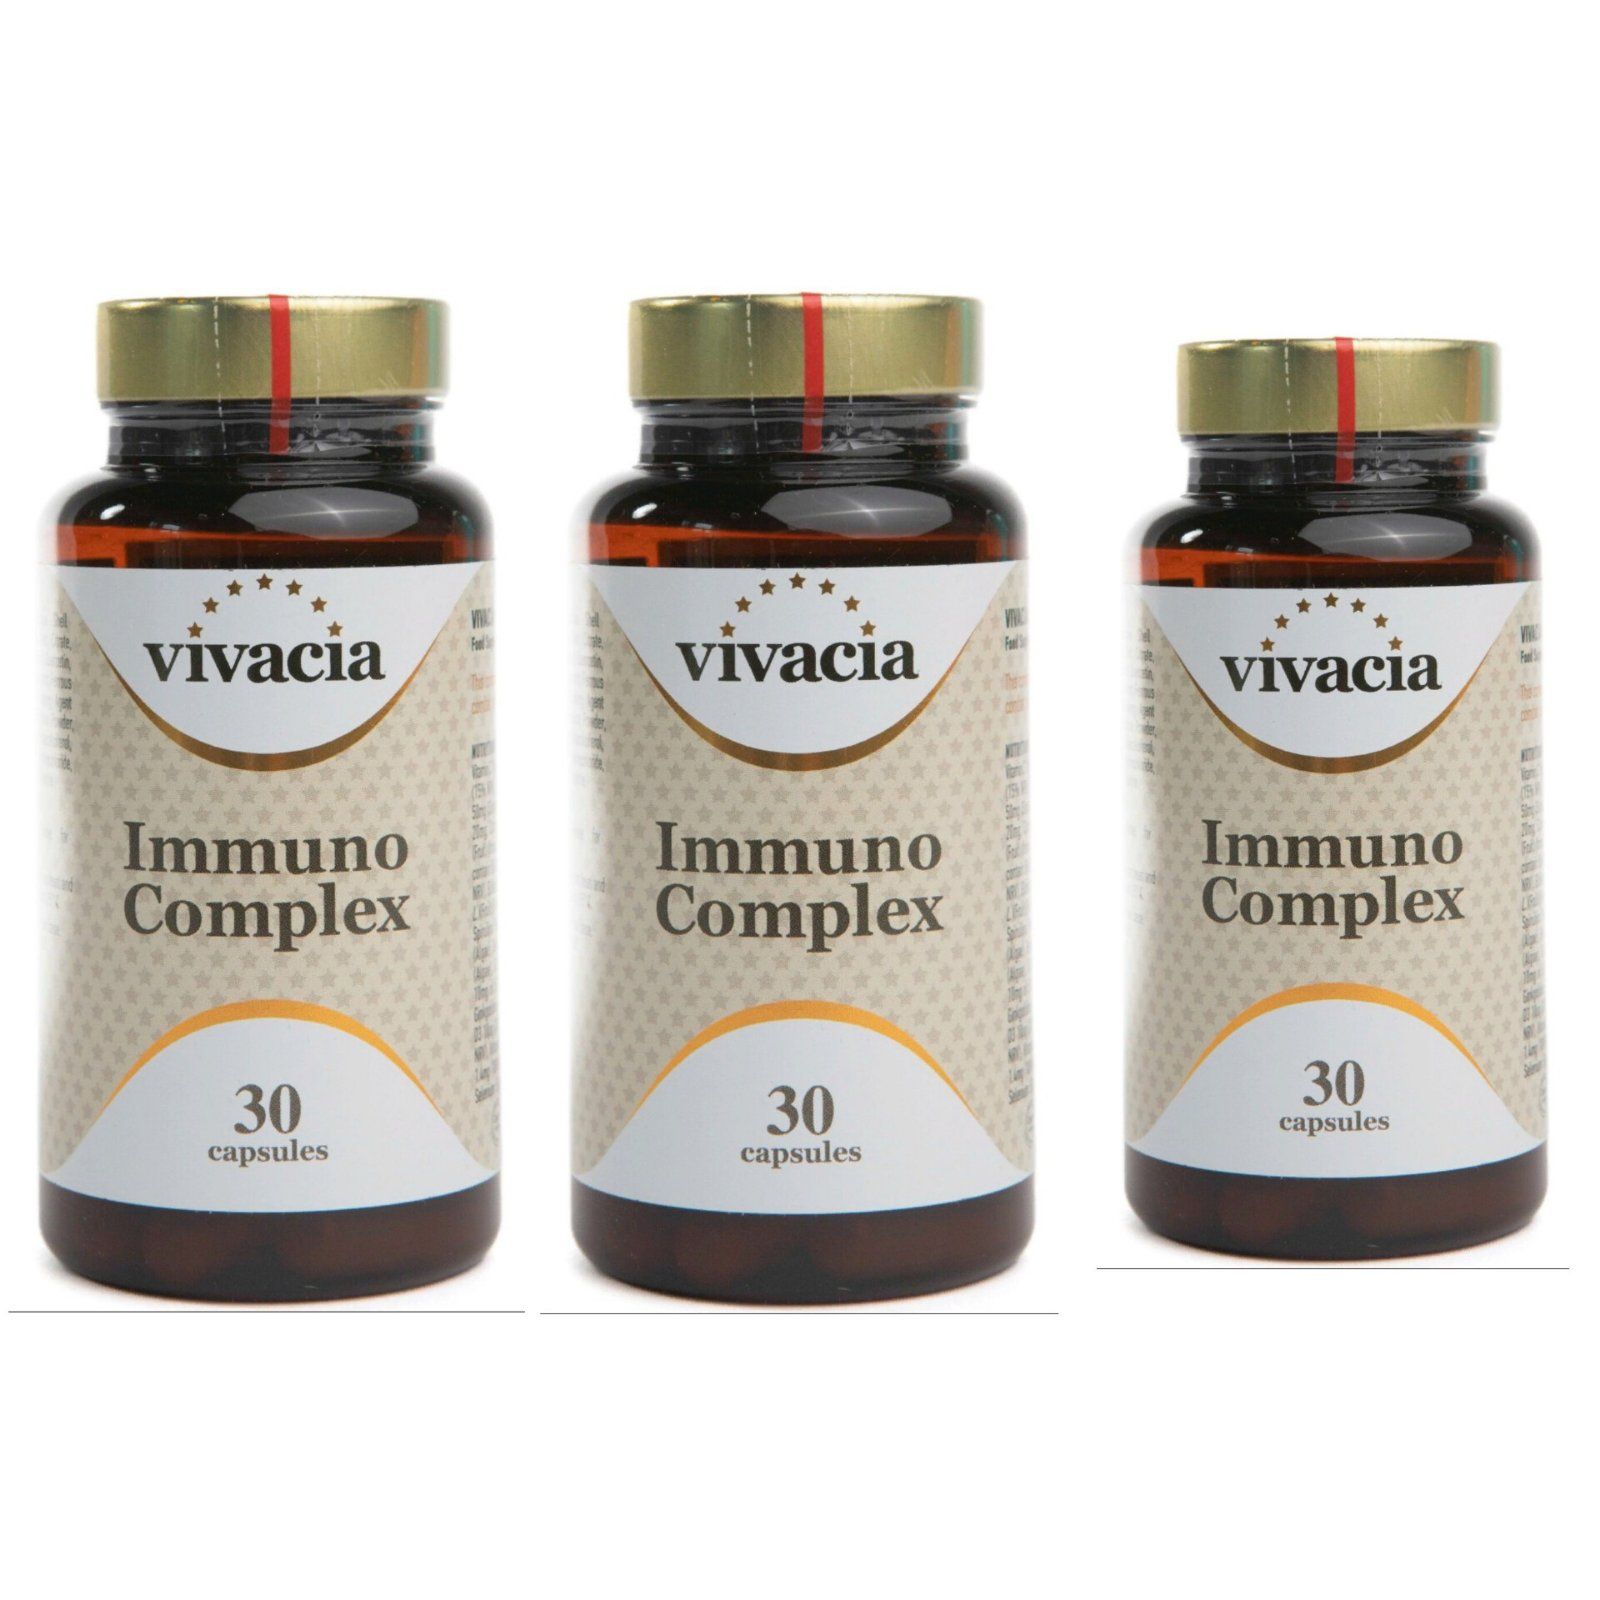 Vivacia vitamin. Vivacia Immuno Complex. Vivacia Ultra Iron Complex капсулы. Vivacia Immuno Complex капсулы. Vivacia Ultra Iron Complex капс., 60 шт..